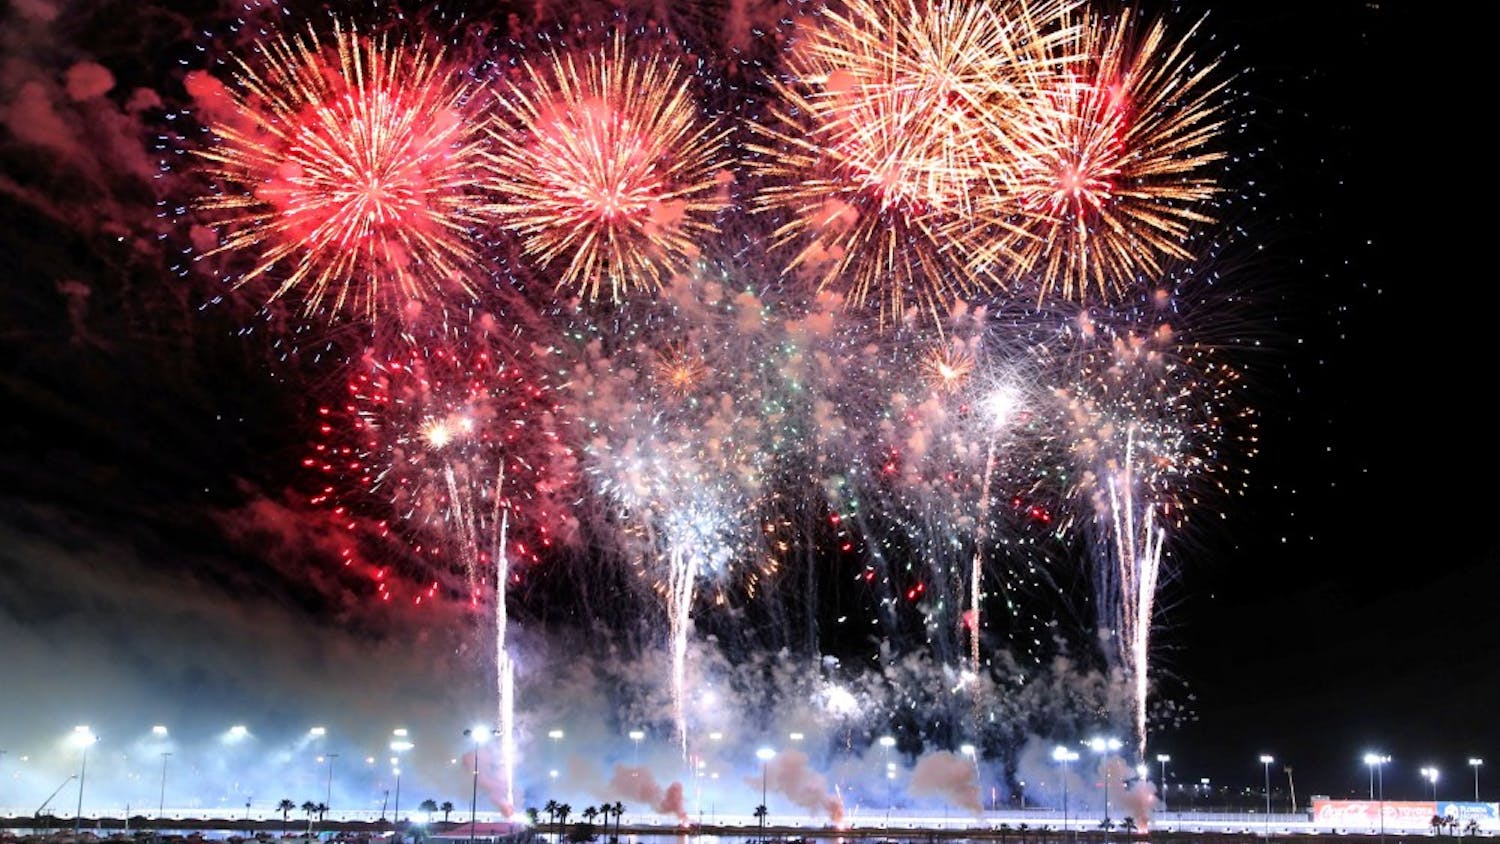 Fireworks fill the sky over the infield after Ricky Stenhouse, Jr., wins the NASCAR Coke Zero 400 at Daytona International Speedway in Daytona Beach, Fla., on Saturday, July 1, 2017. (Joe Burbank/Orlando Sentinel/TNS)